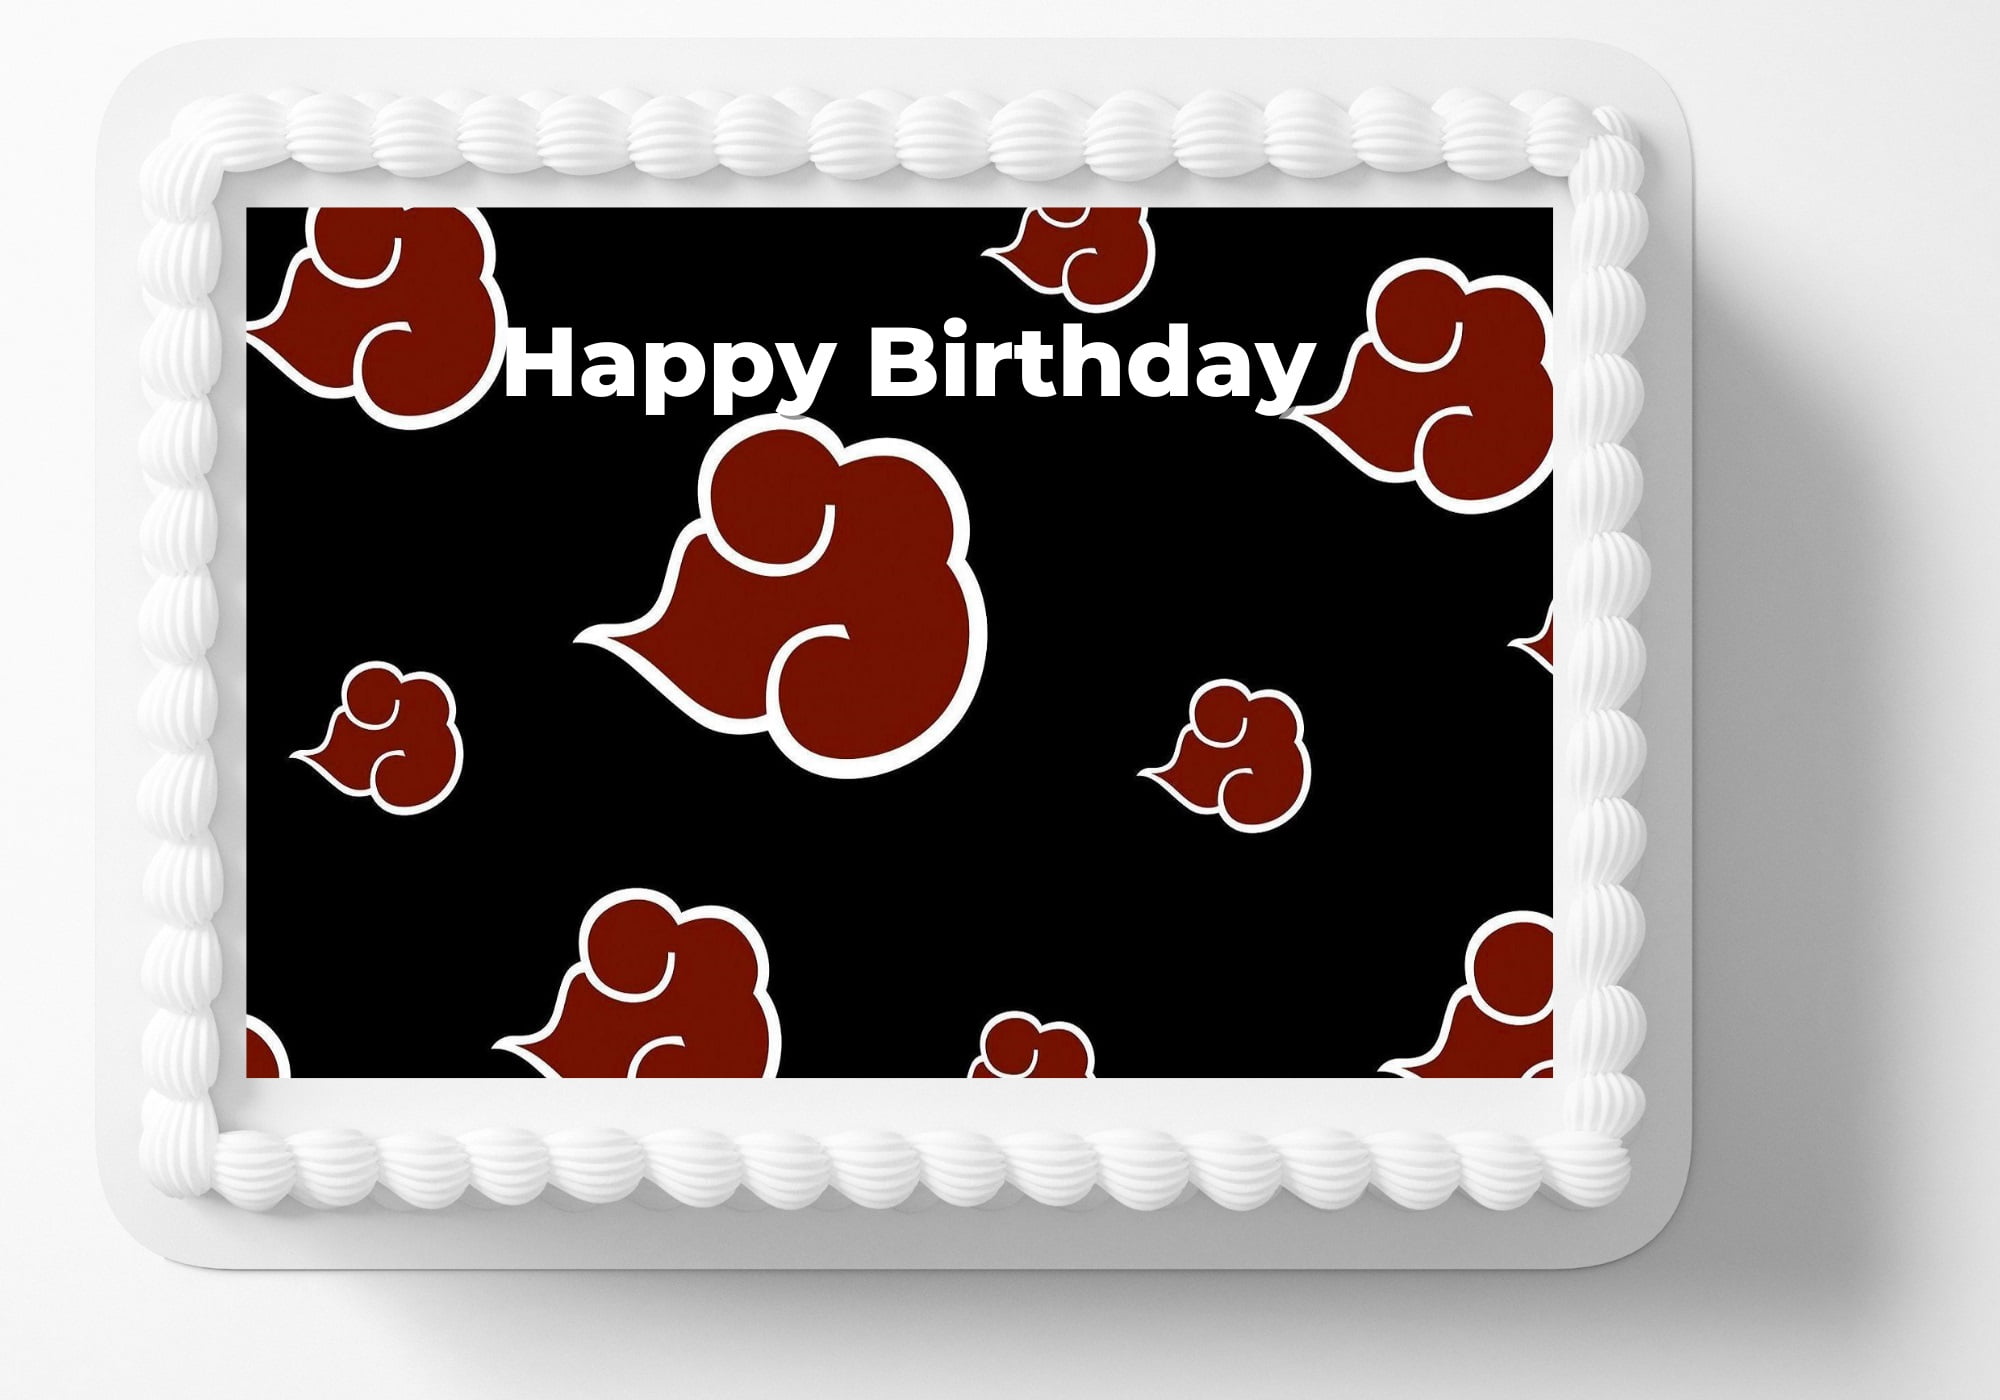 Anime Manga Death Edible Custom Cake Topper Cake Topper Edible Image  Birthday Cake Edible Cake Sticker Decal